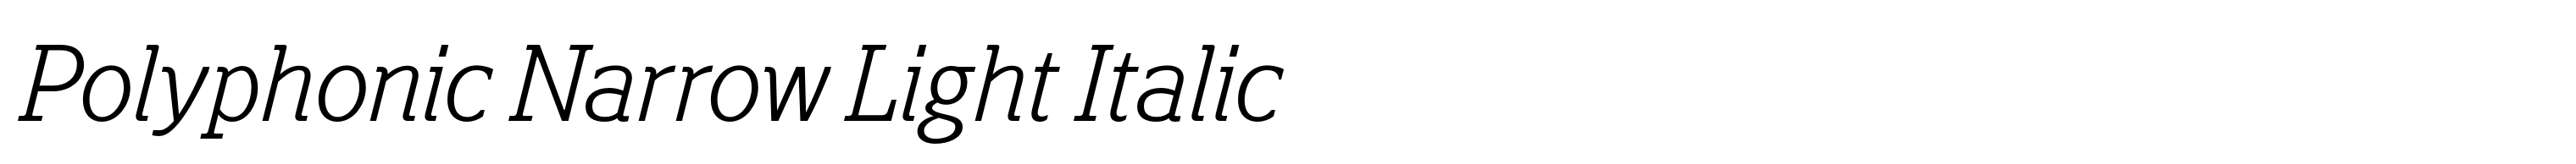 Polyphonic Narrow Light Italic